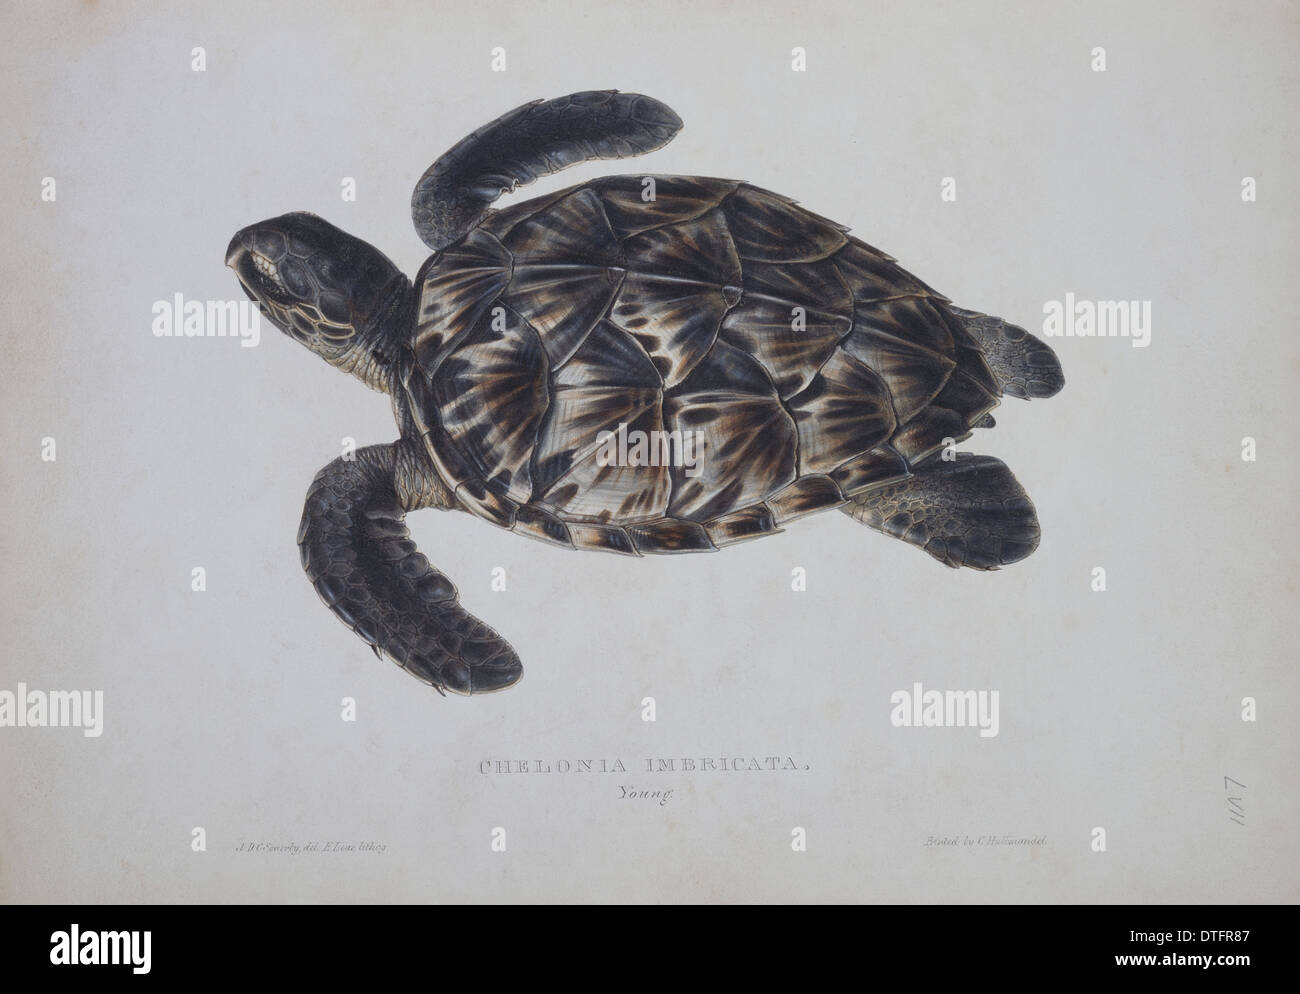 Eretmochelys imbricata, hawksbill turtle Stock Photo